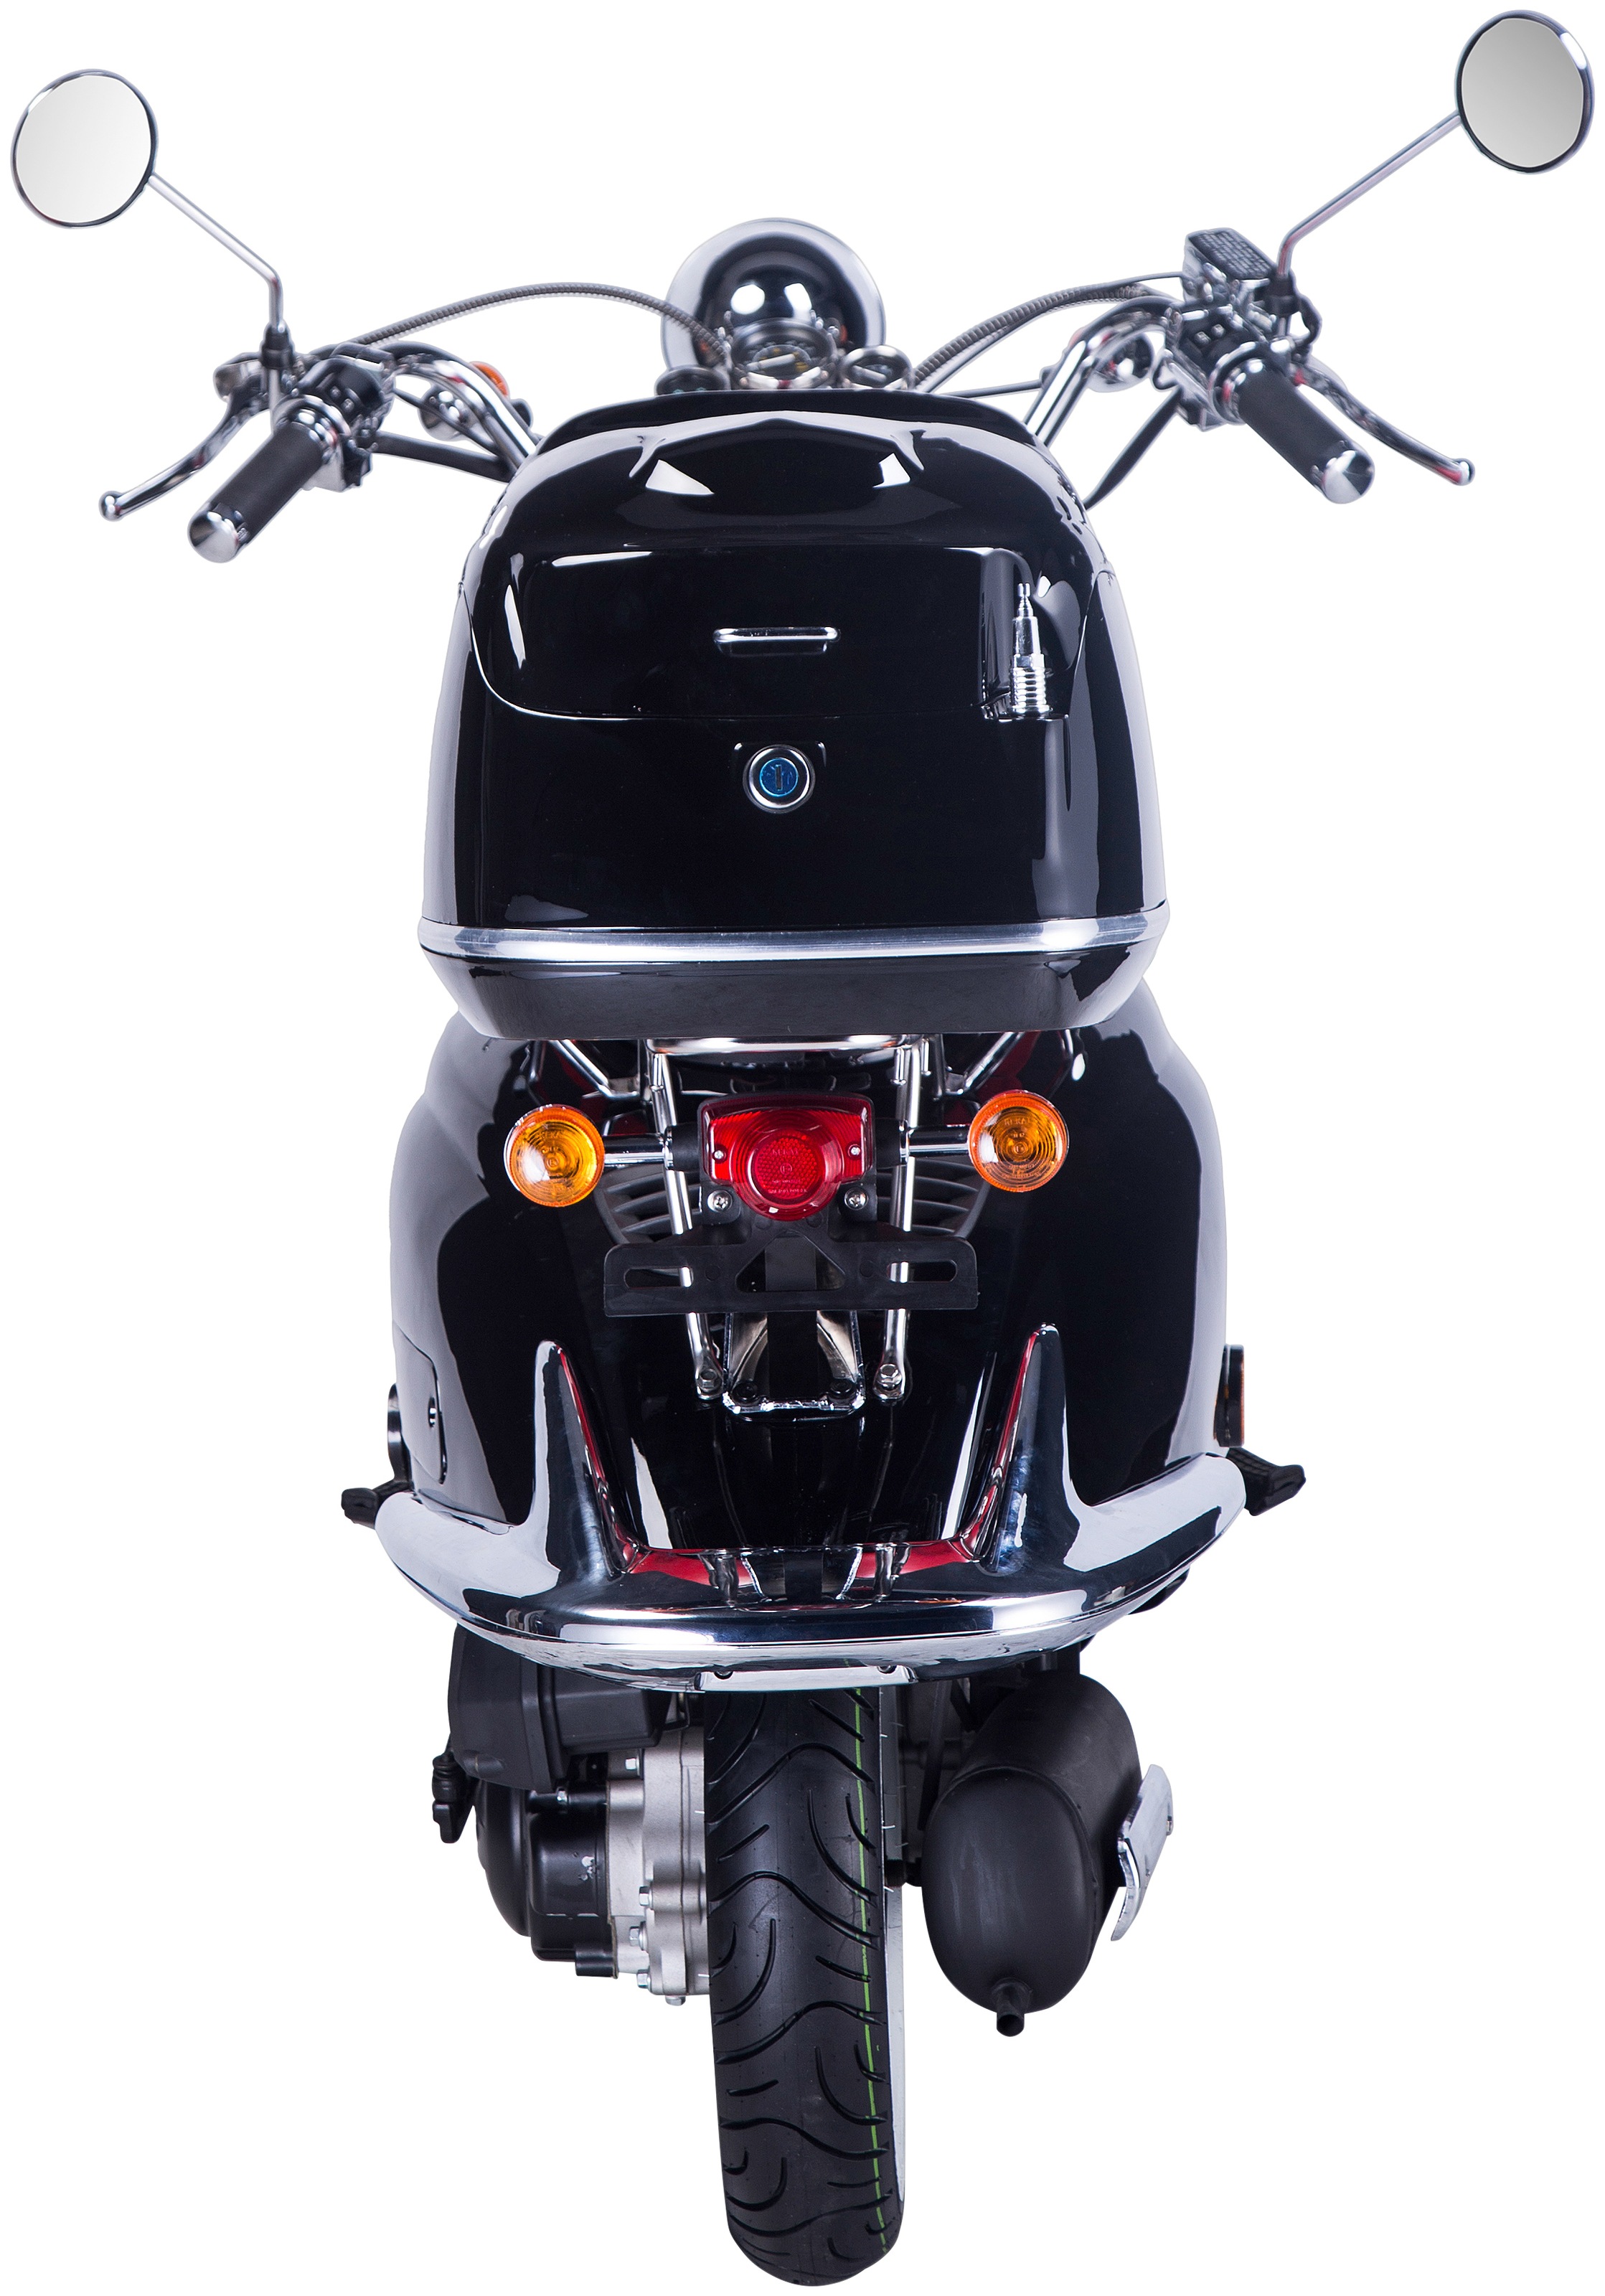 GT UNION Motorroller »Strada«, 125 cm³, 85 km/h, Euro 5, 8,6 PS, (Set, mit Topcase), im Retro-Look